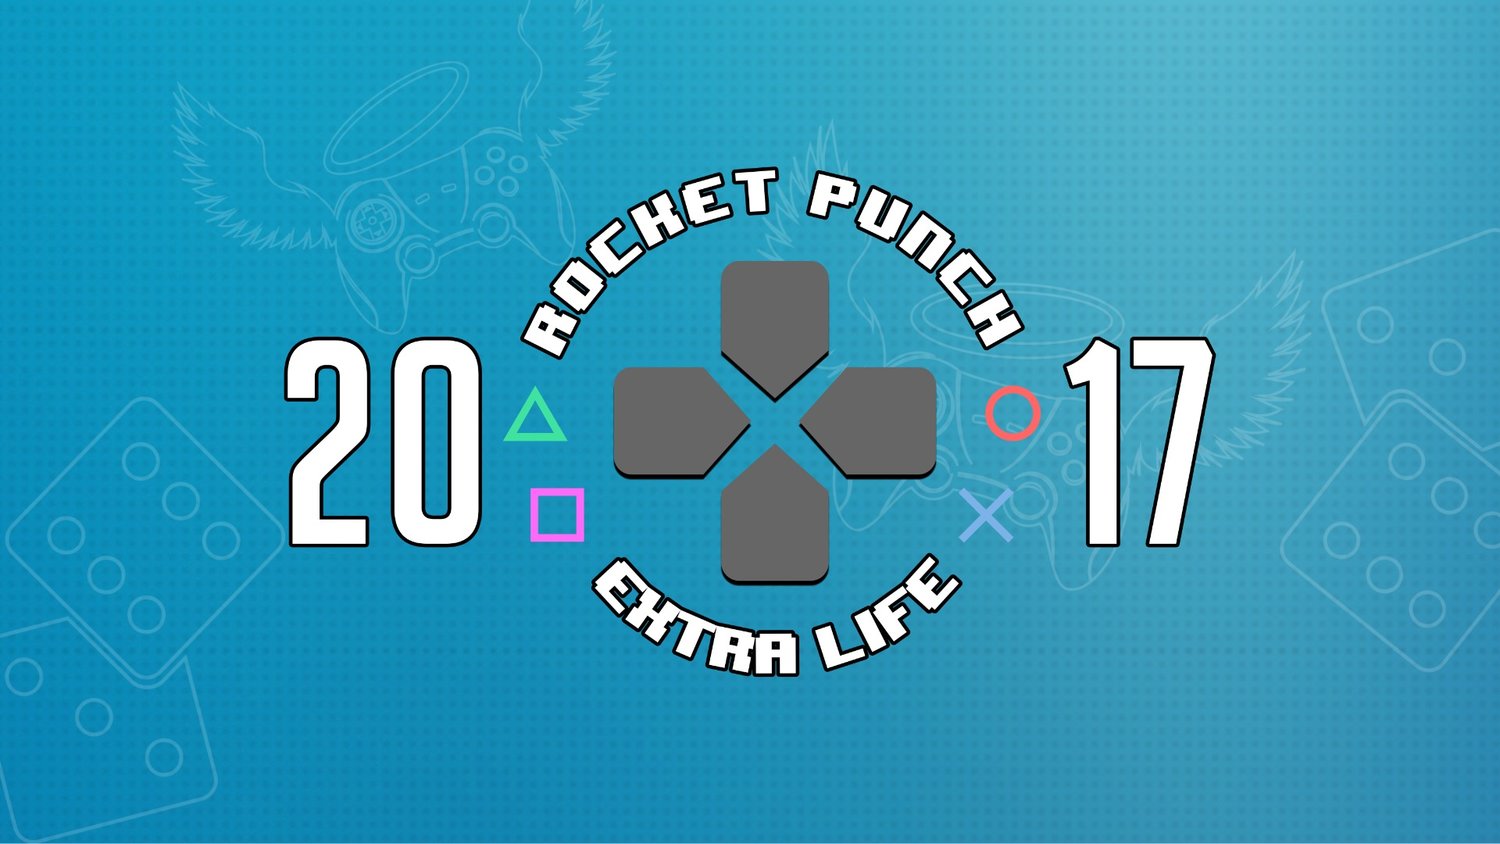 Rocket Punch Extra Life 2017